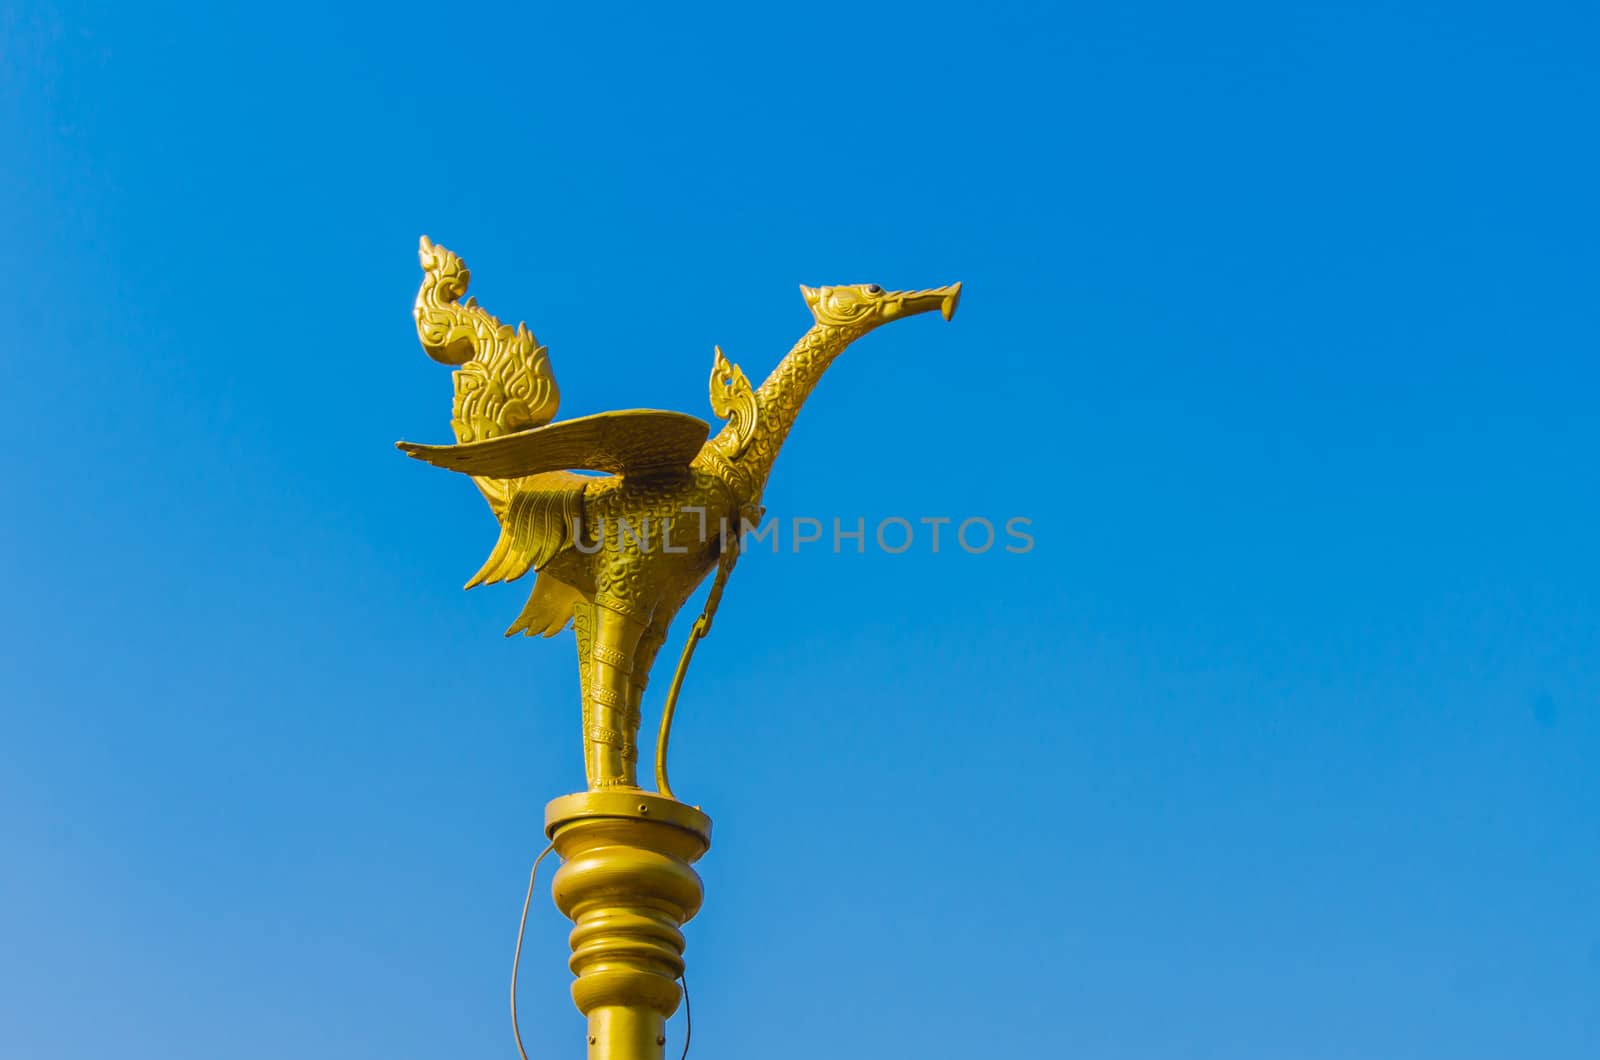 Gold swan sculpture on blue sky